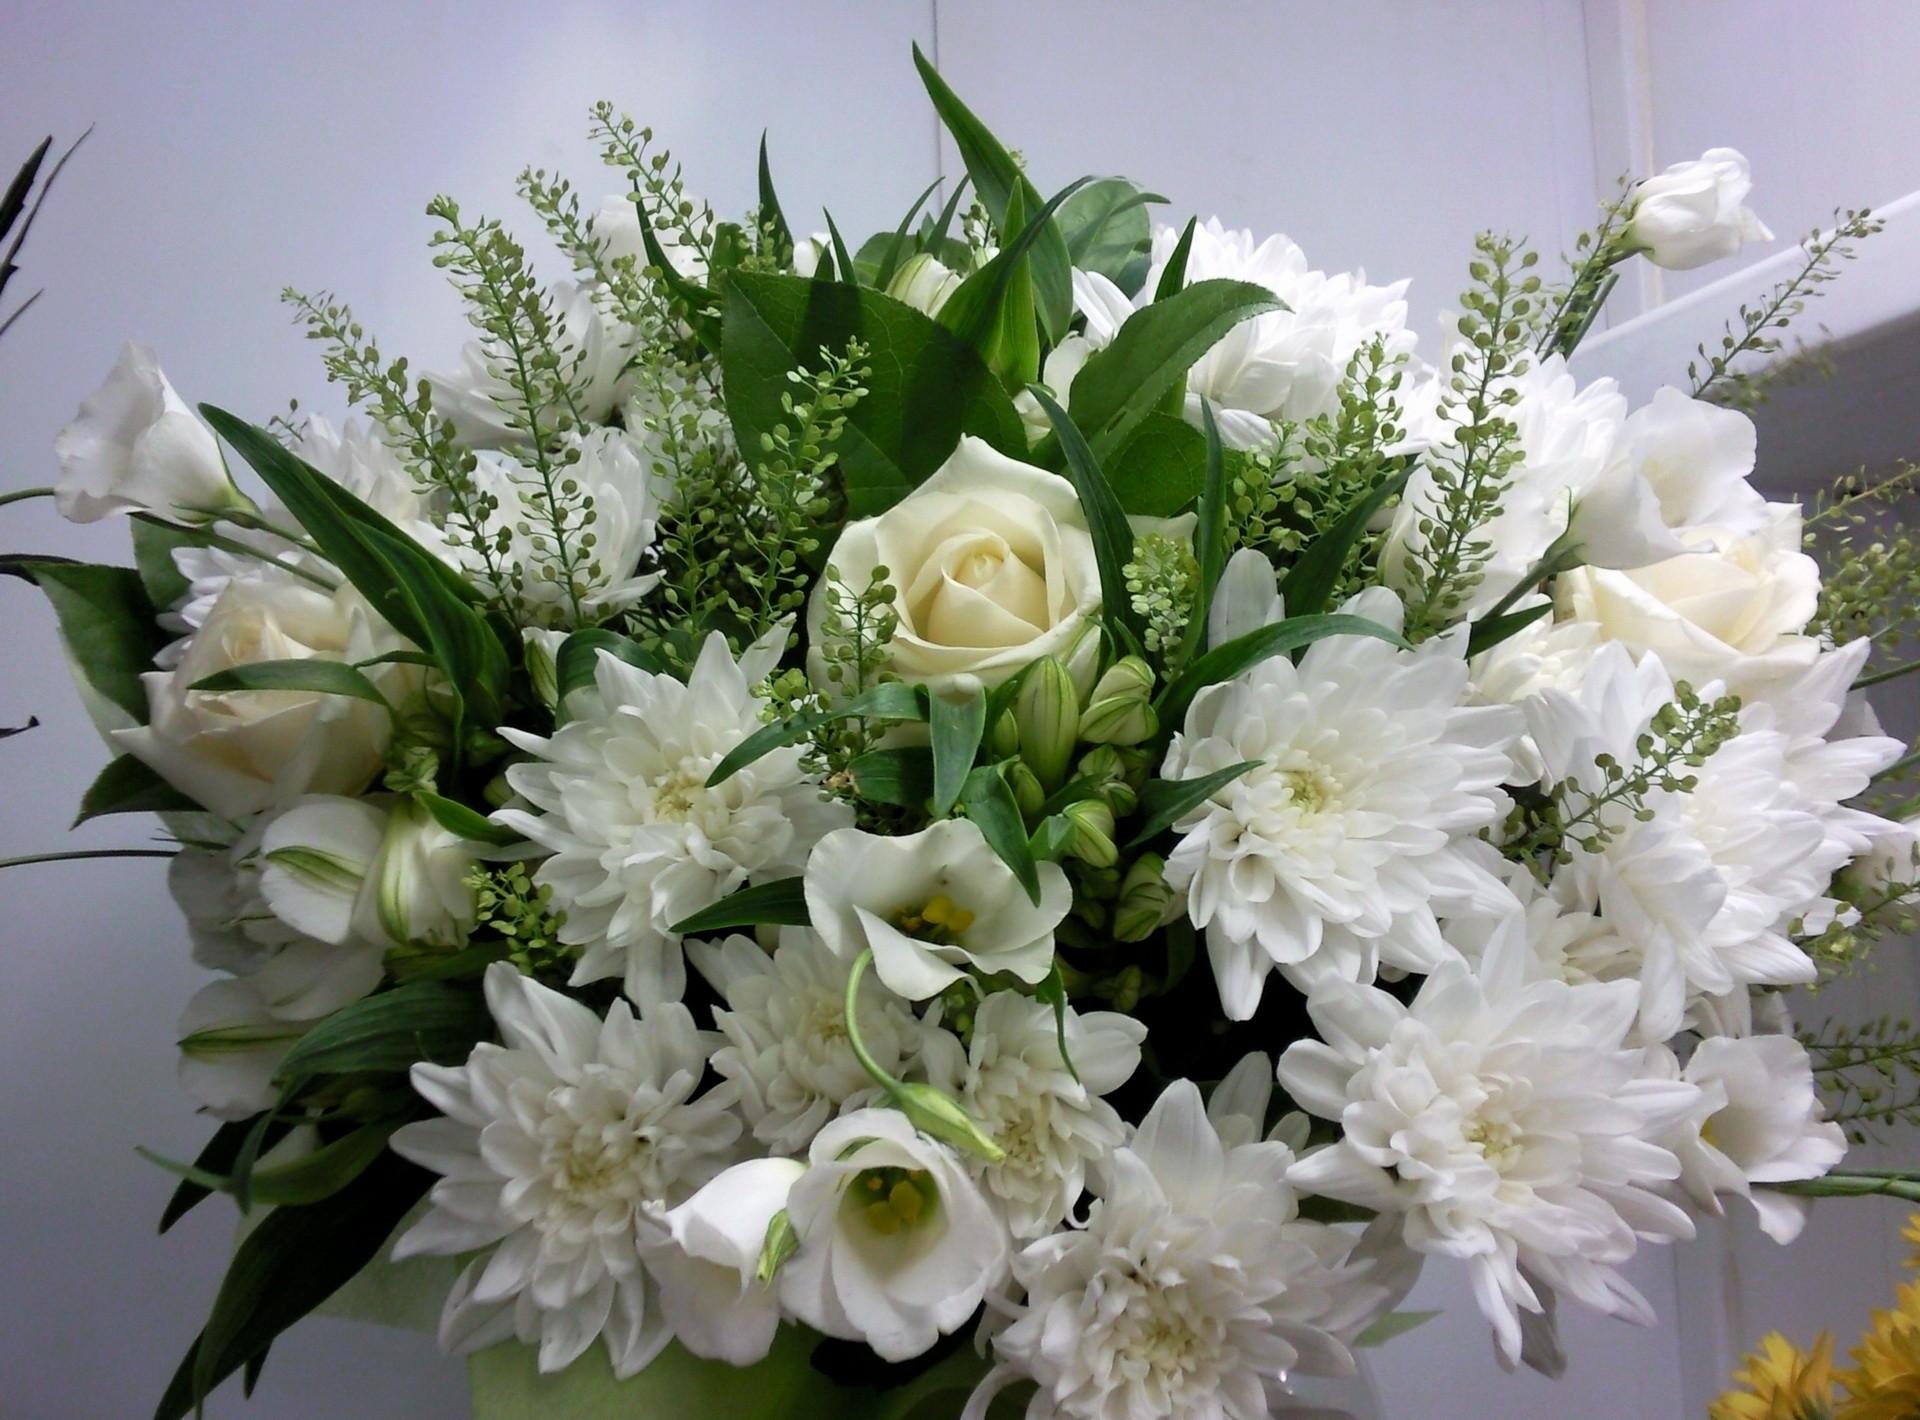 bouquet, roses, flowers, chrysanthemum, white, snow white cellphone